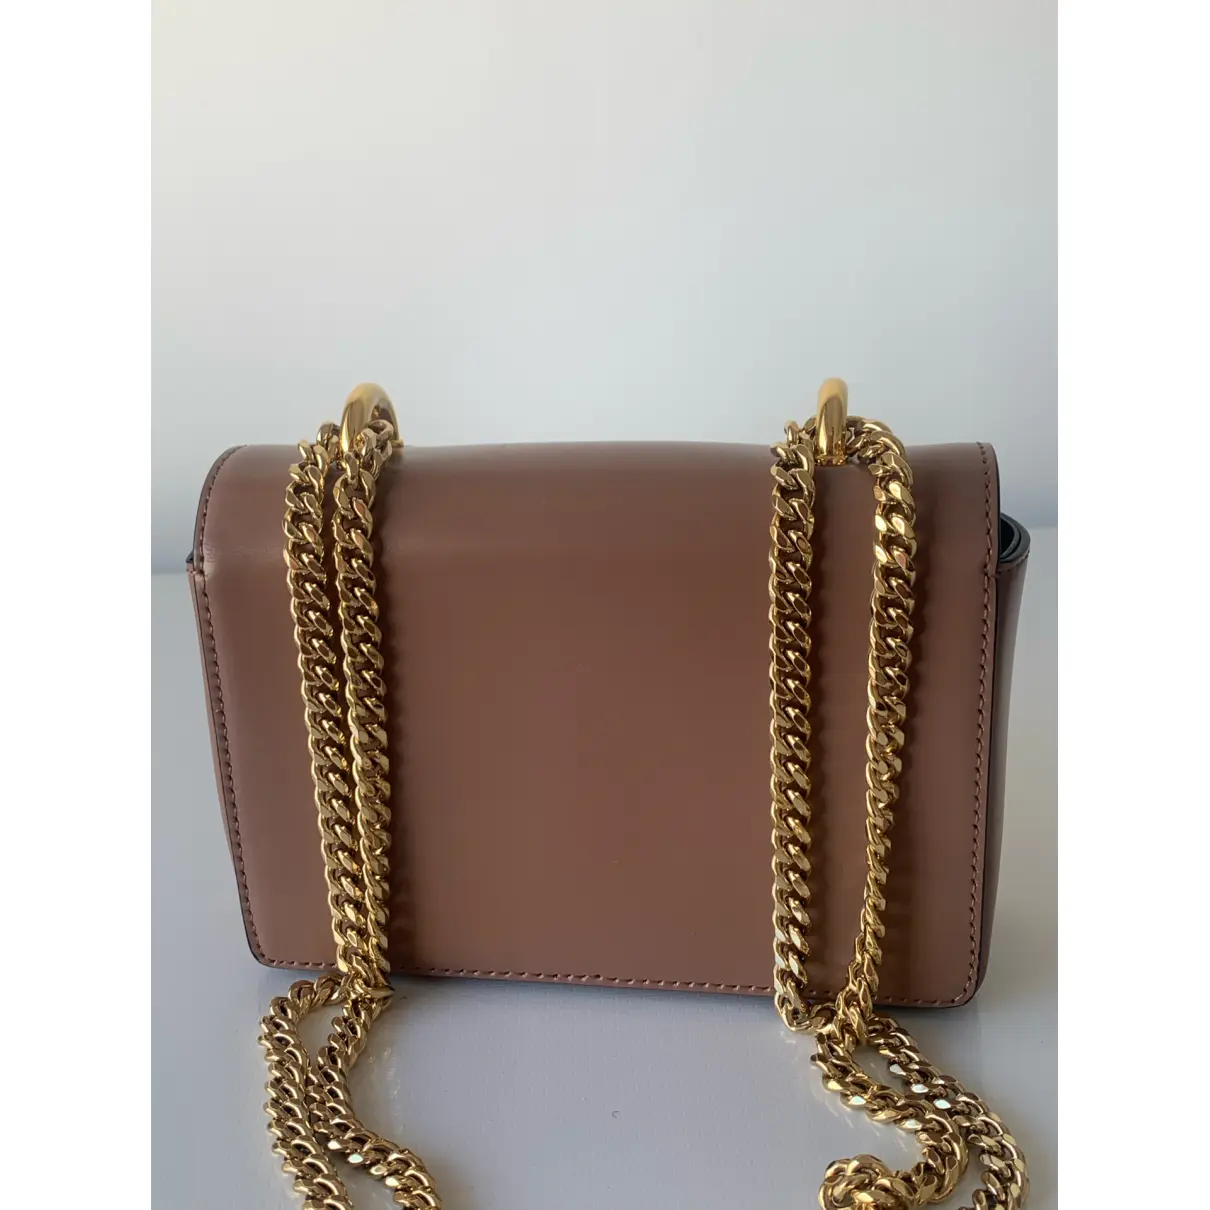 Buy Balmain Ring box 20 leather handbag online